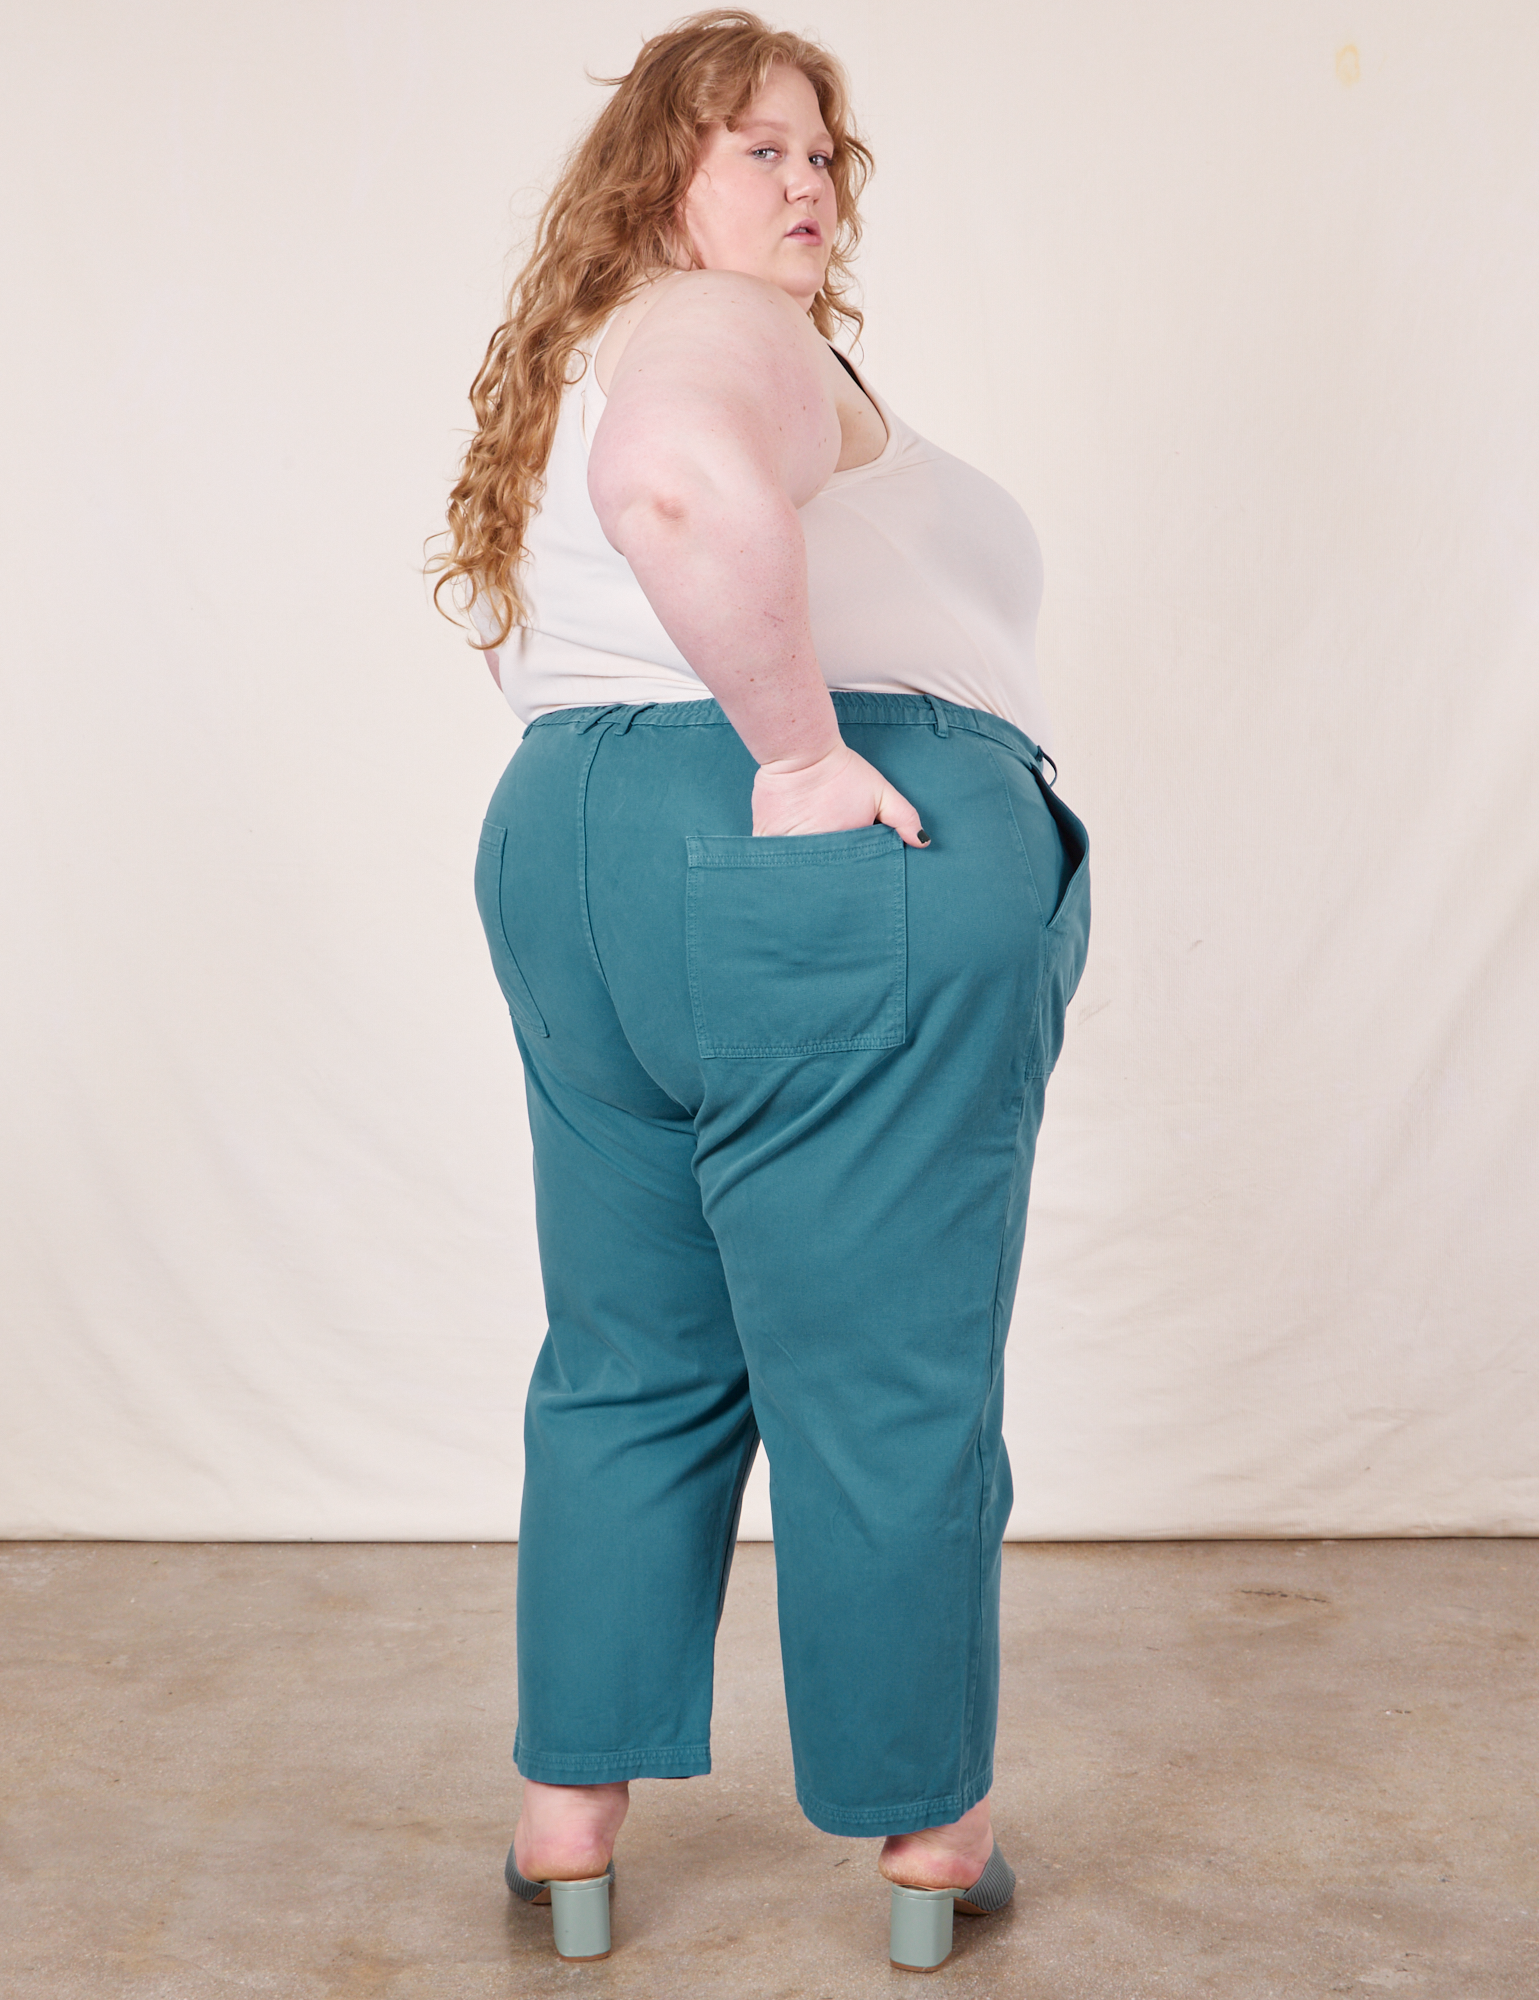 Work Pants in Marine Blue back view on Catie wearing Tank Top in vintage tee off-white